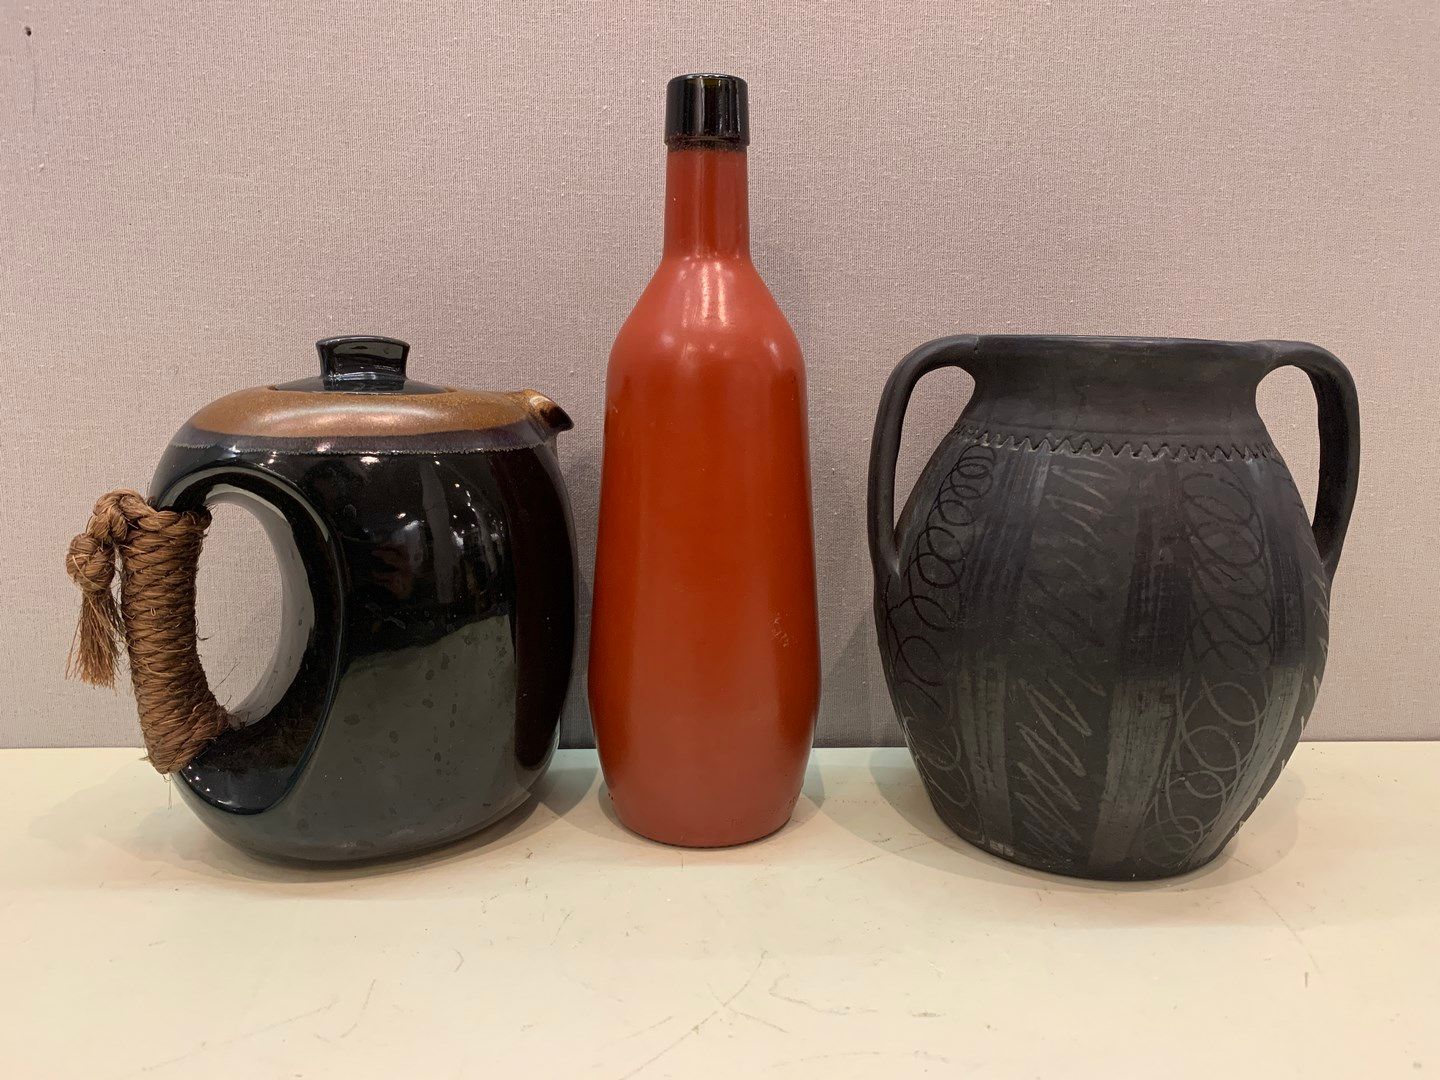 Null 陶瓷套装包括1个茶壶，1个带双把手的花瓶和1个茶杯